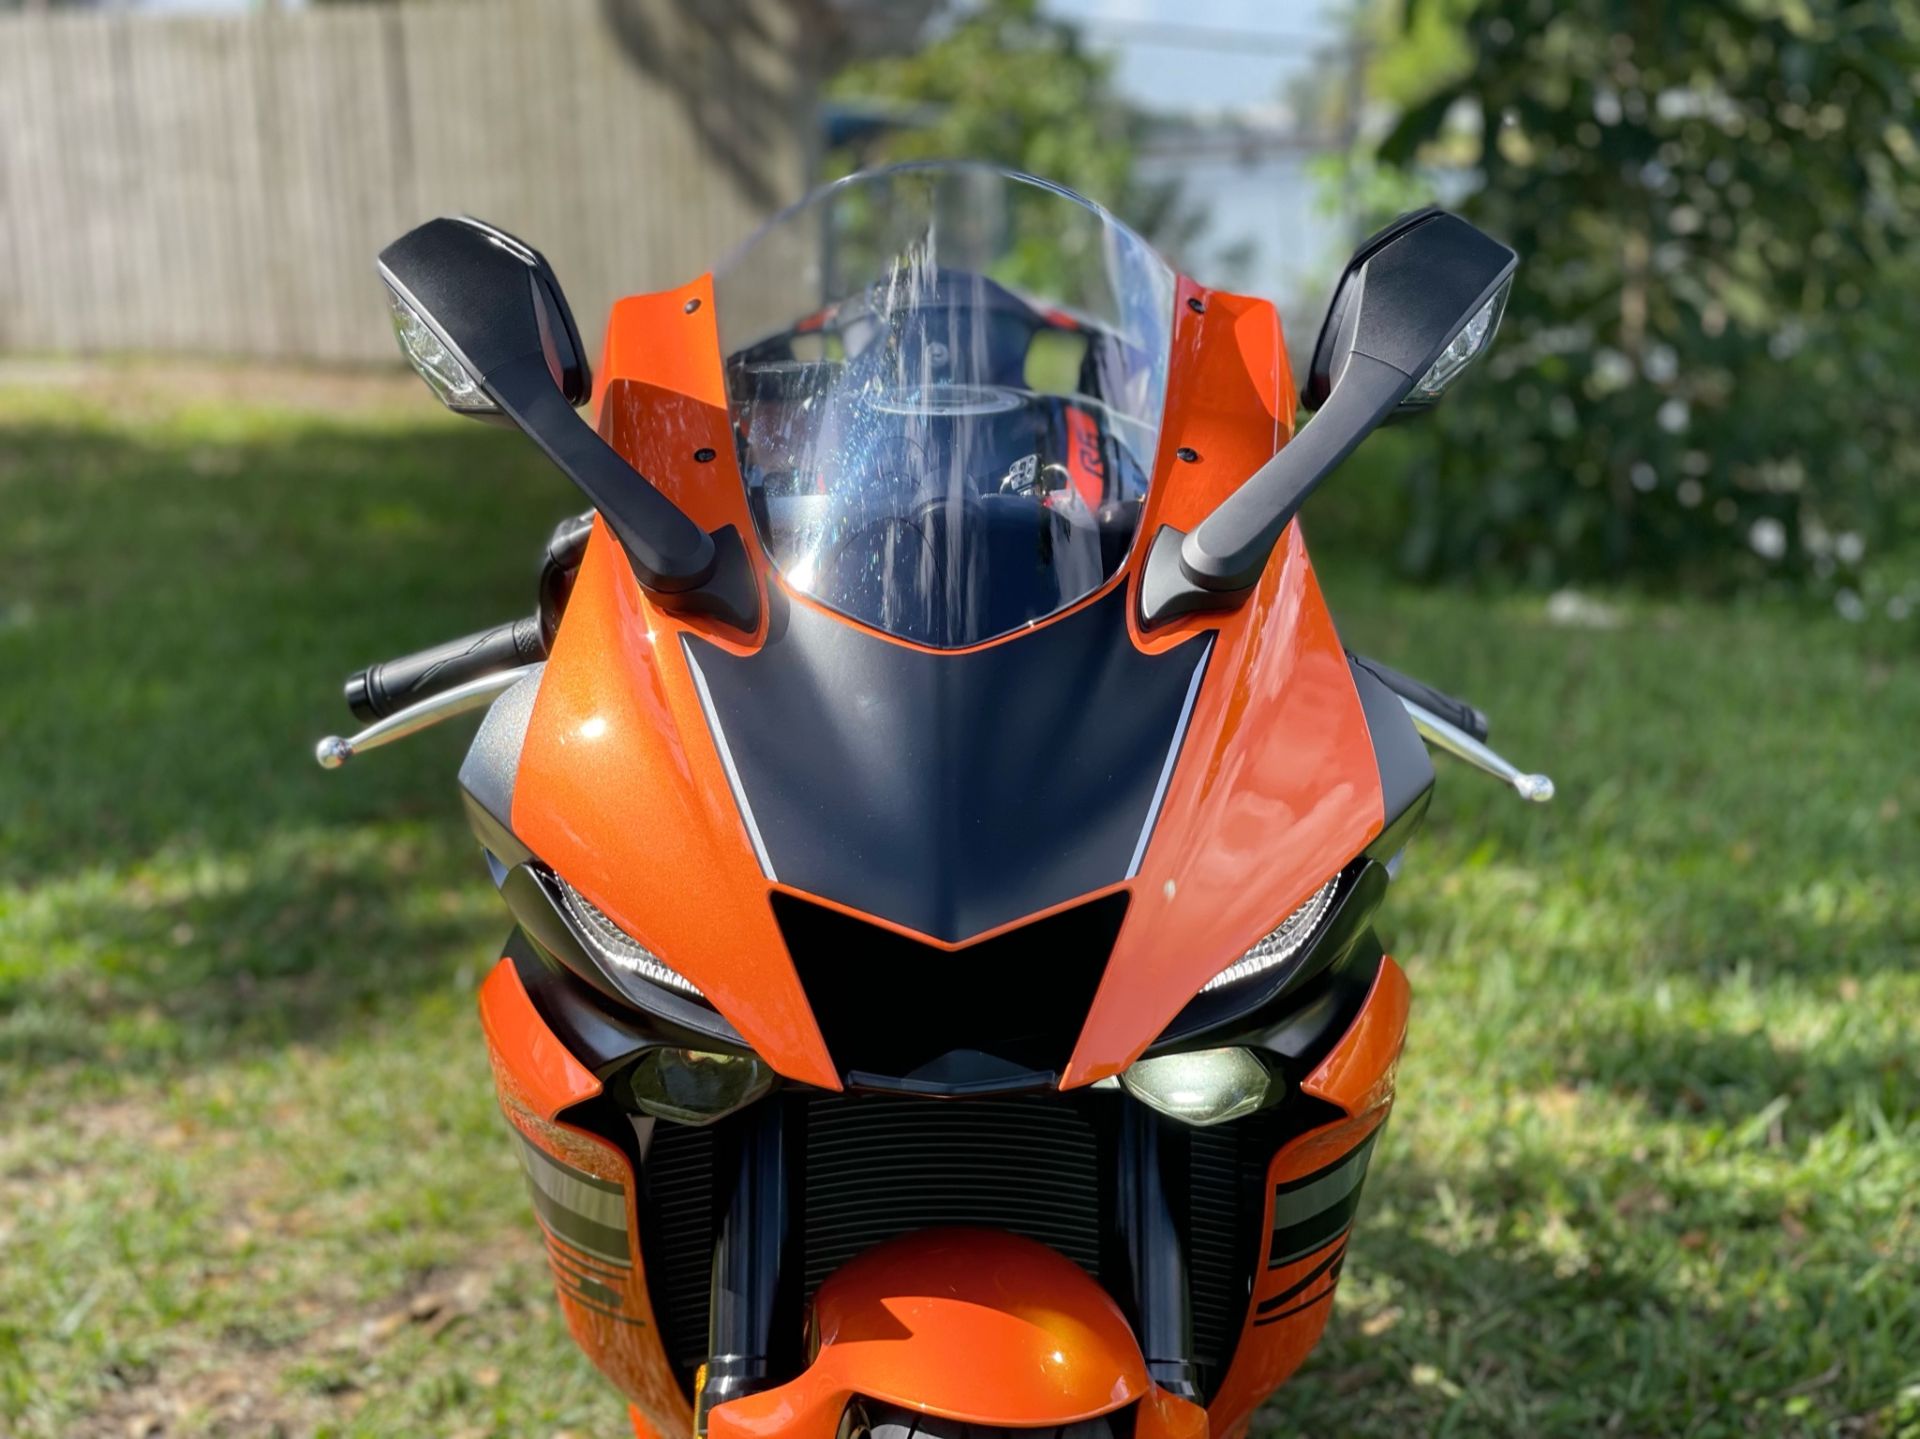 2020 Yamaha YZF-R6 in North Miami Beach, Florida - Photo 8